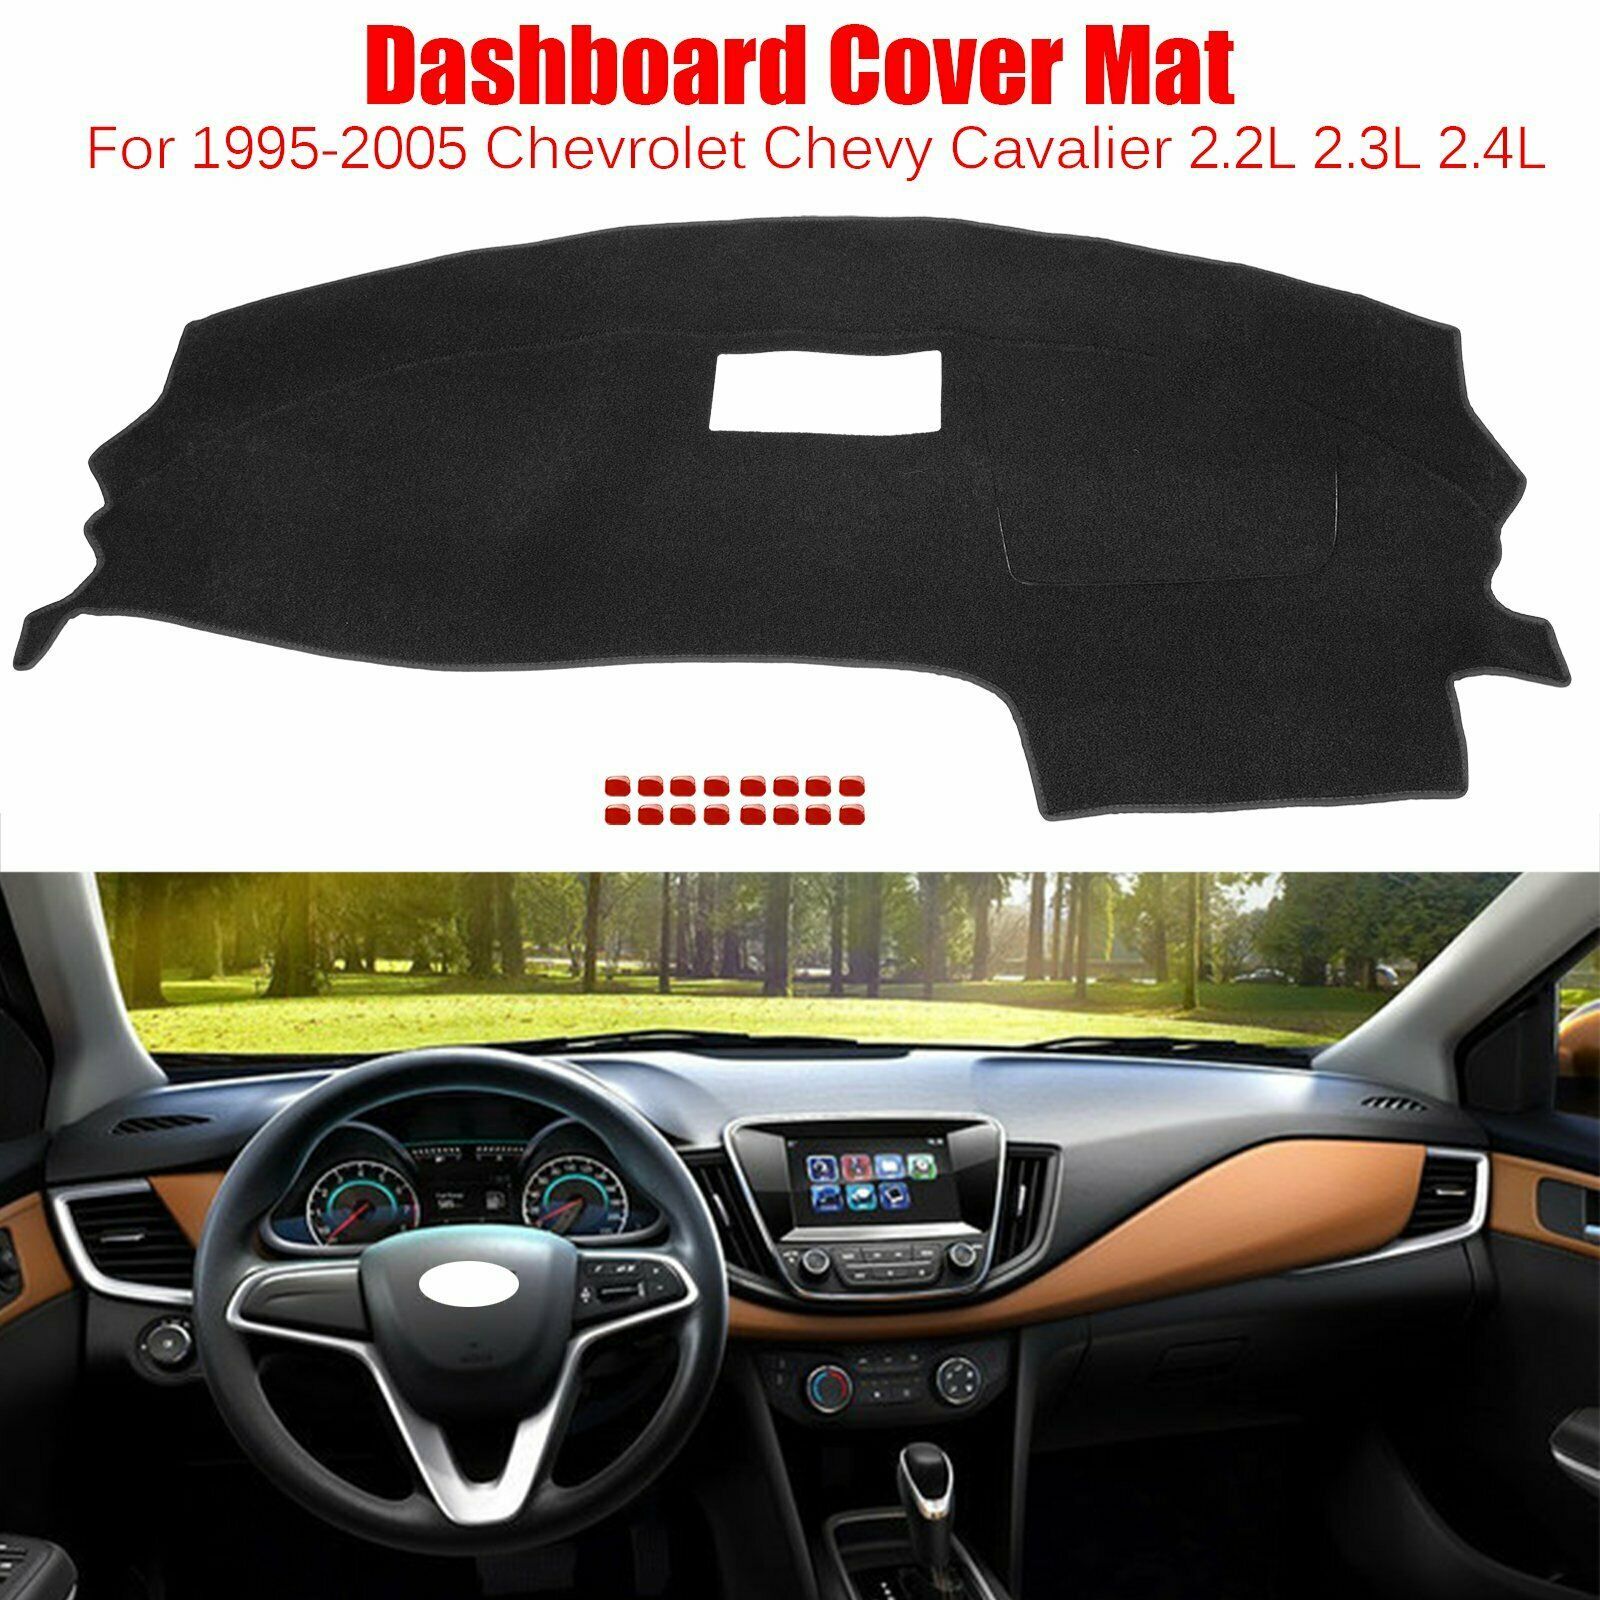 Dash Cover Dashmat Dashboard Mat Carpet For 1995-2005 Chevrolet Chevy Cavalier